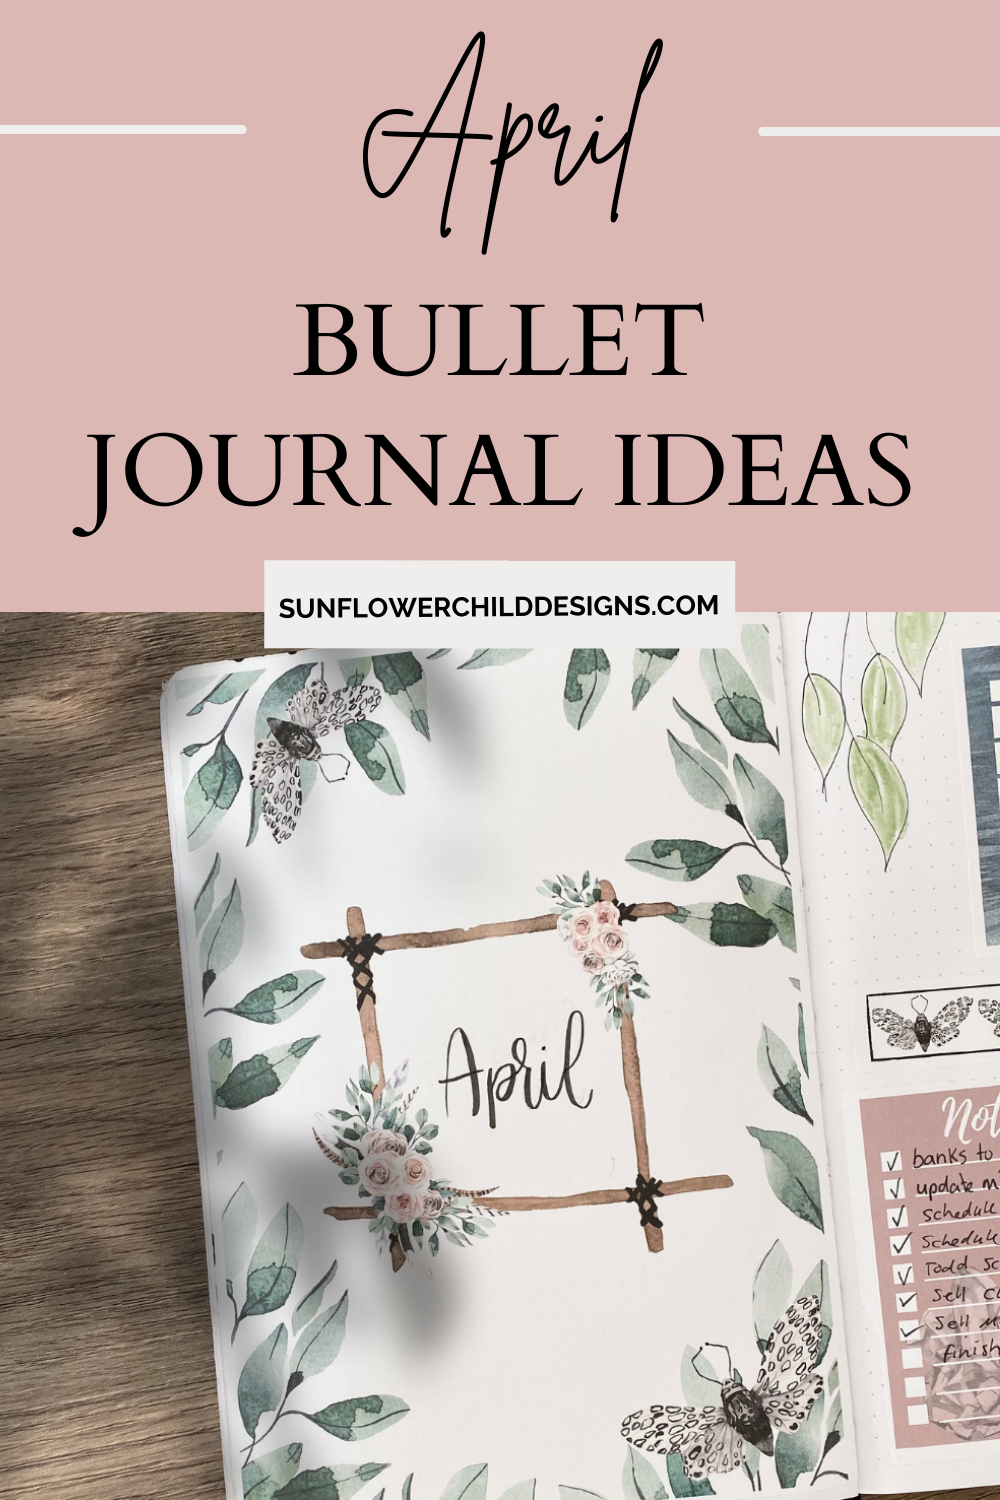 bullet journal design ideas for your bullet journal.png